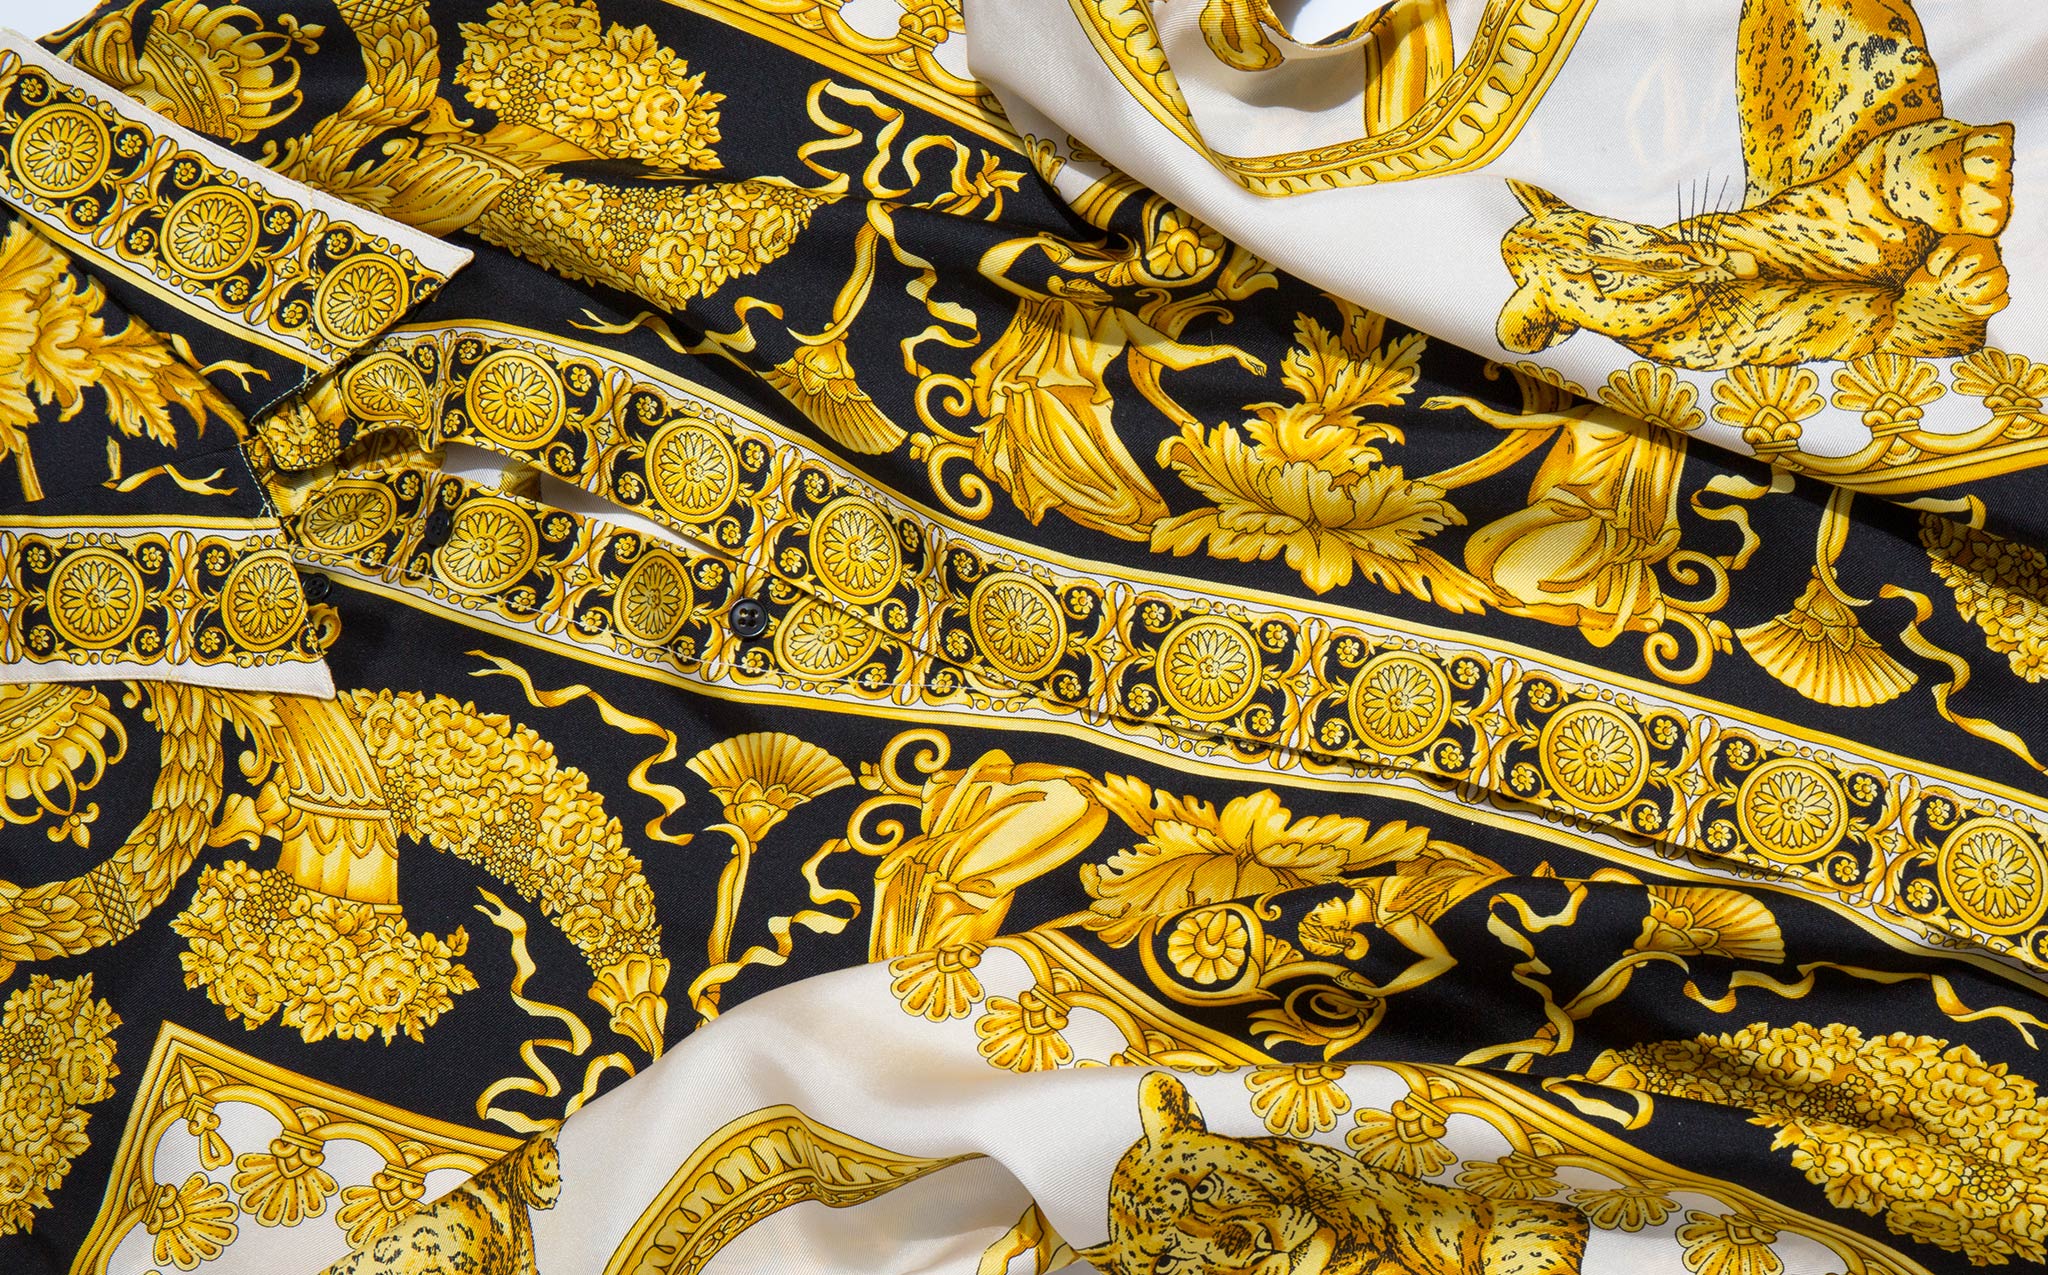 Gianni Versace Iconic 1990's Silk Baroque Print Shirt